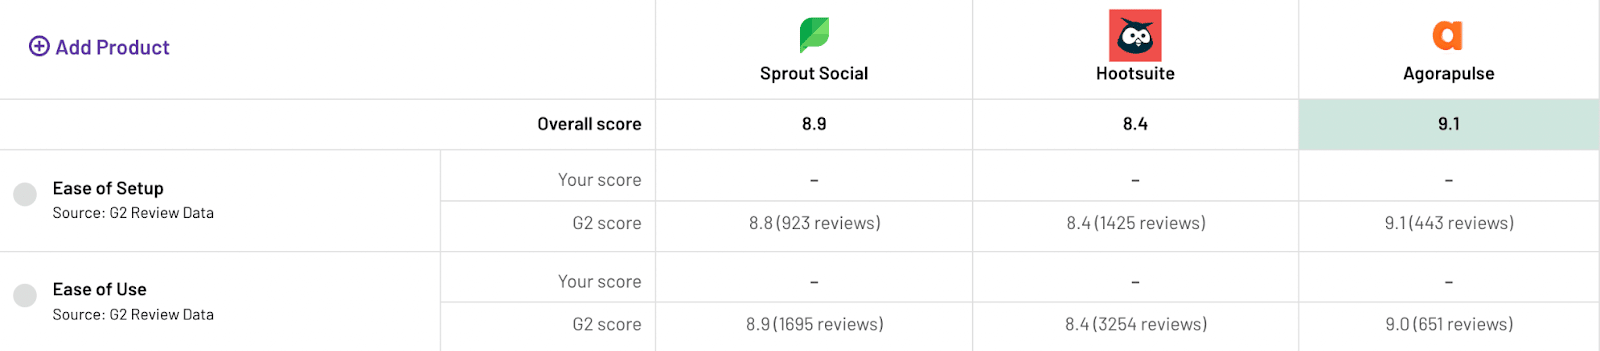 ease of use agorapulse vs hootsuite vs sprout social